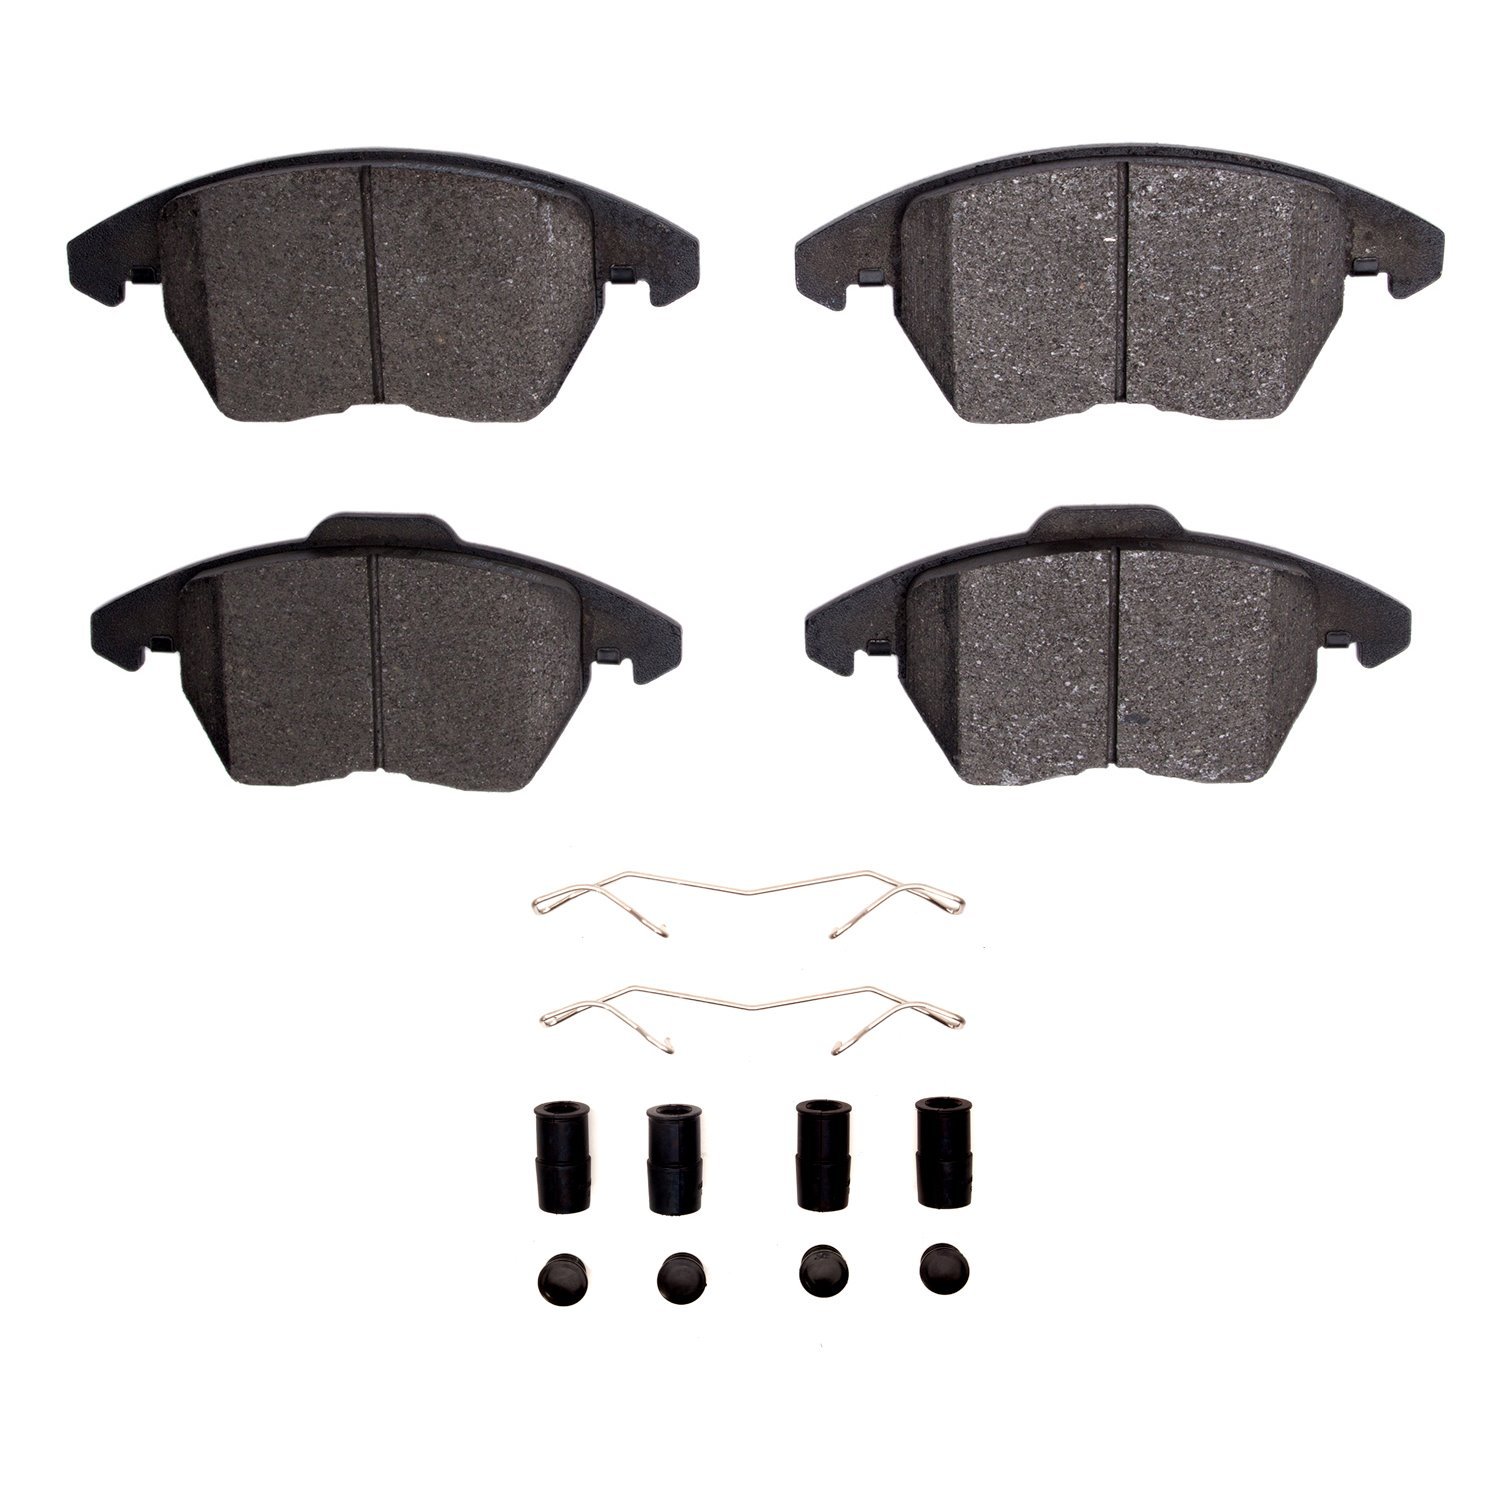 1310-1107-11 3000-Series Ceramic Brake Pads & Hardware Kit, 2011-2015 Peugeot, Position: Front